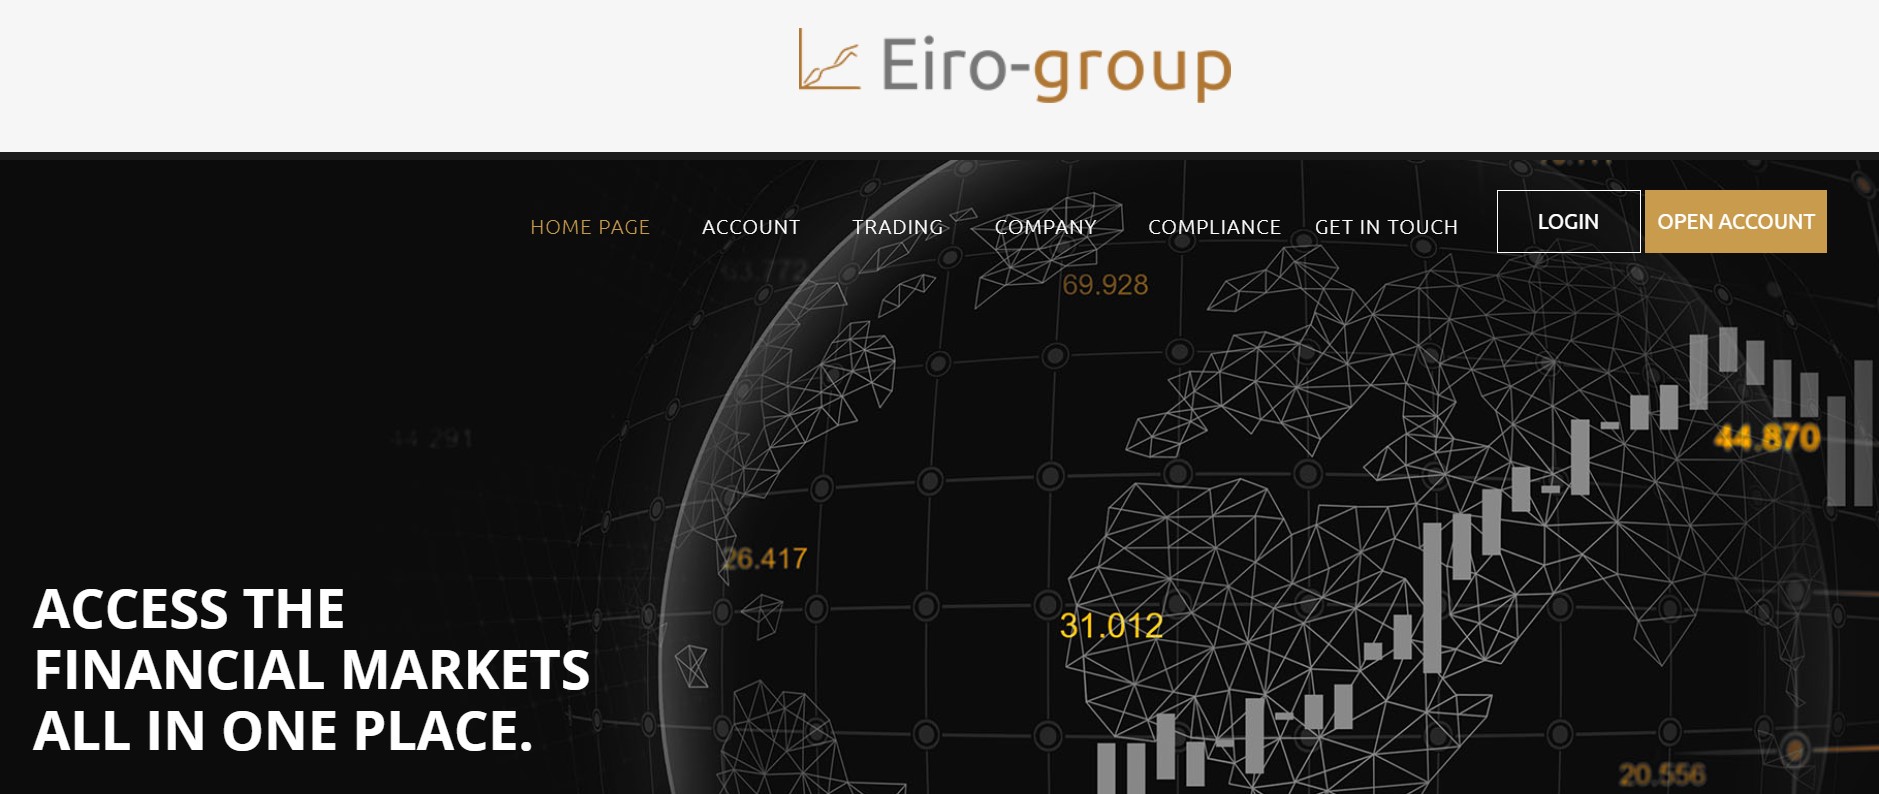 Eiro-Group website